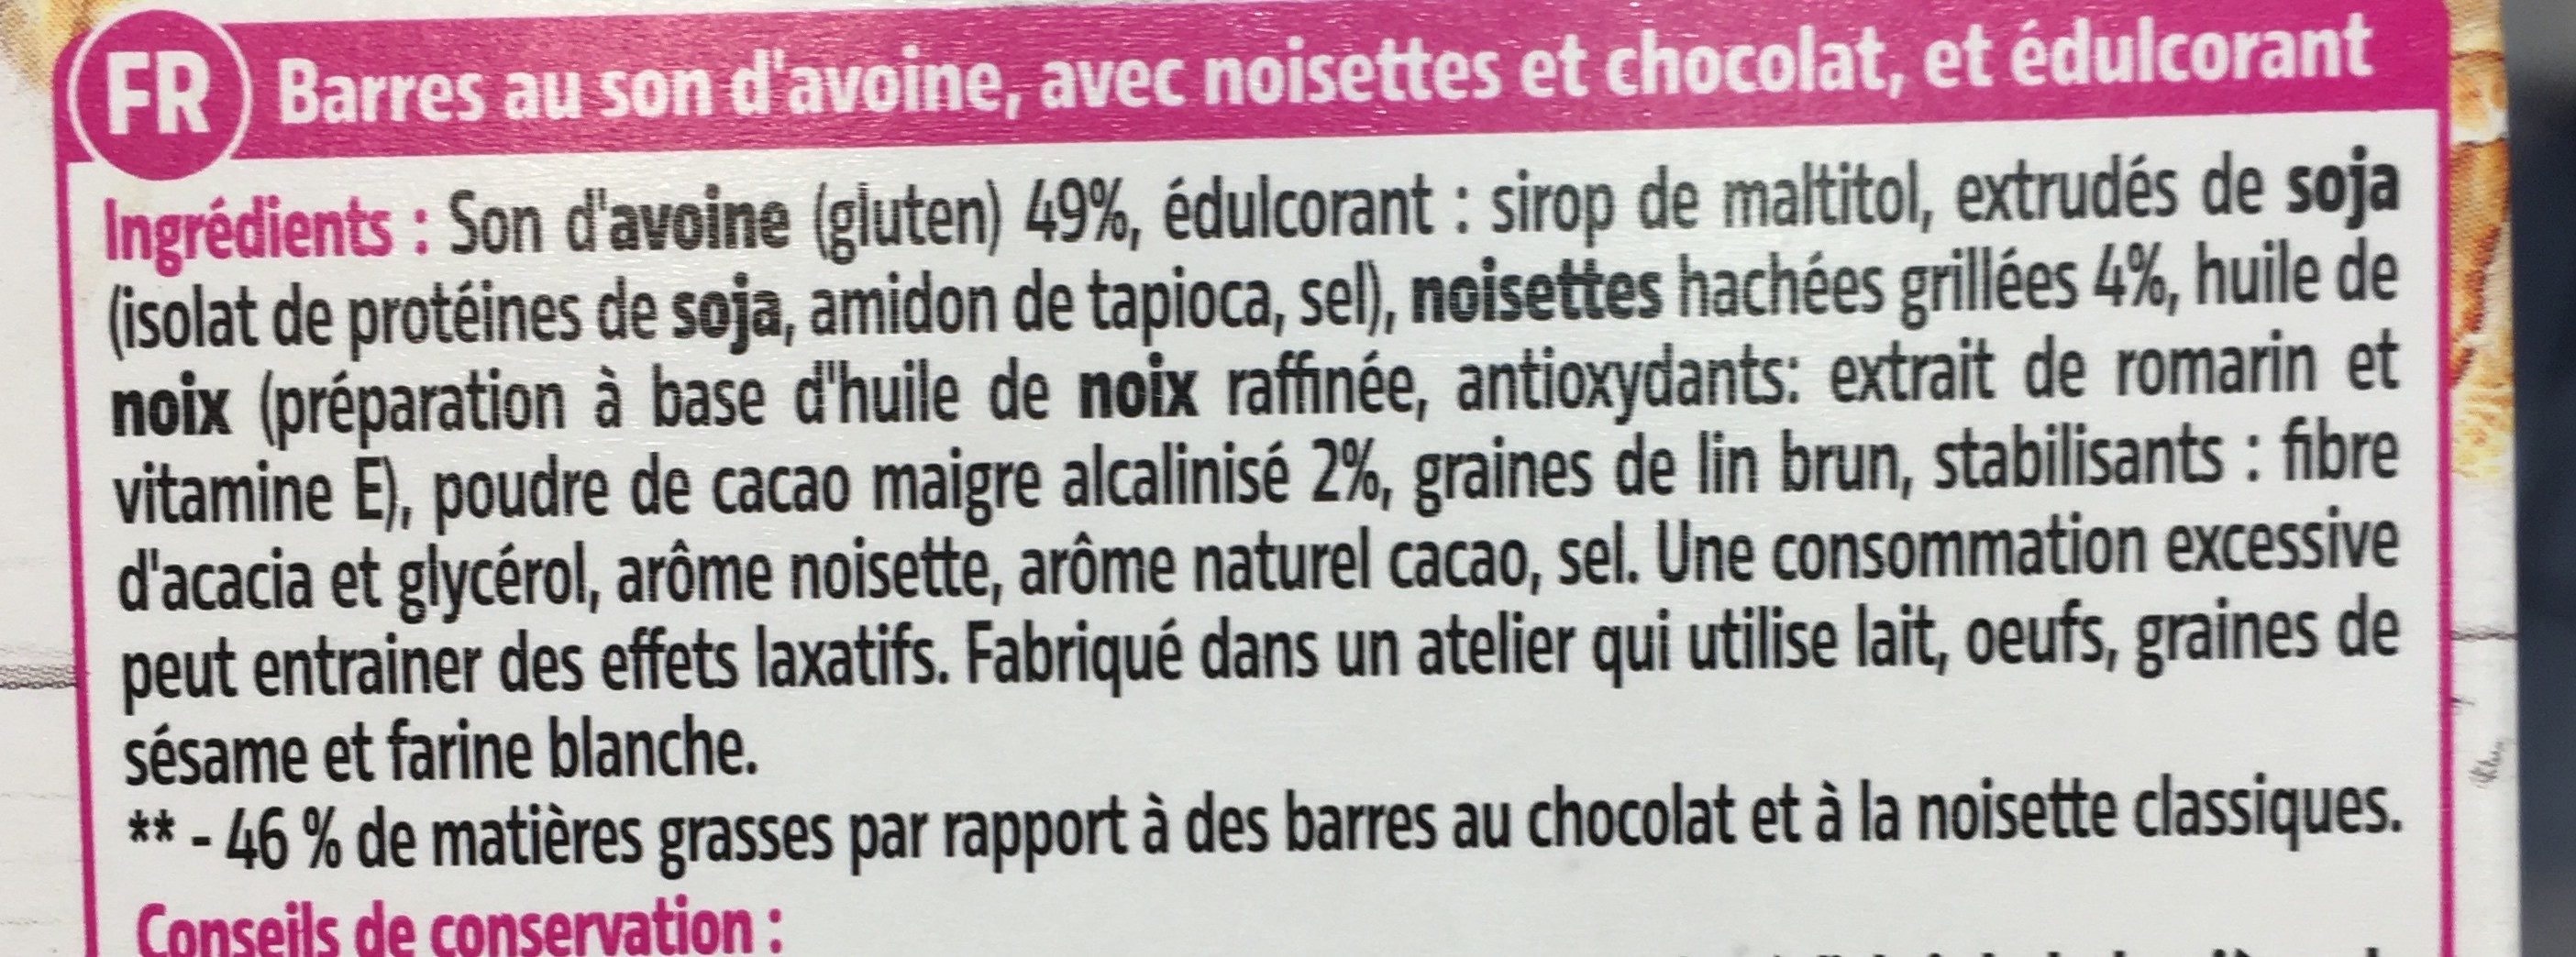 Dukan barres chocolat et noisettes - Ingredients - fr